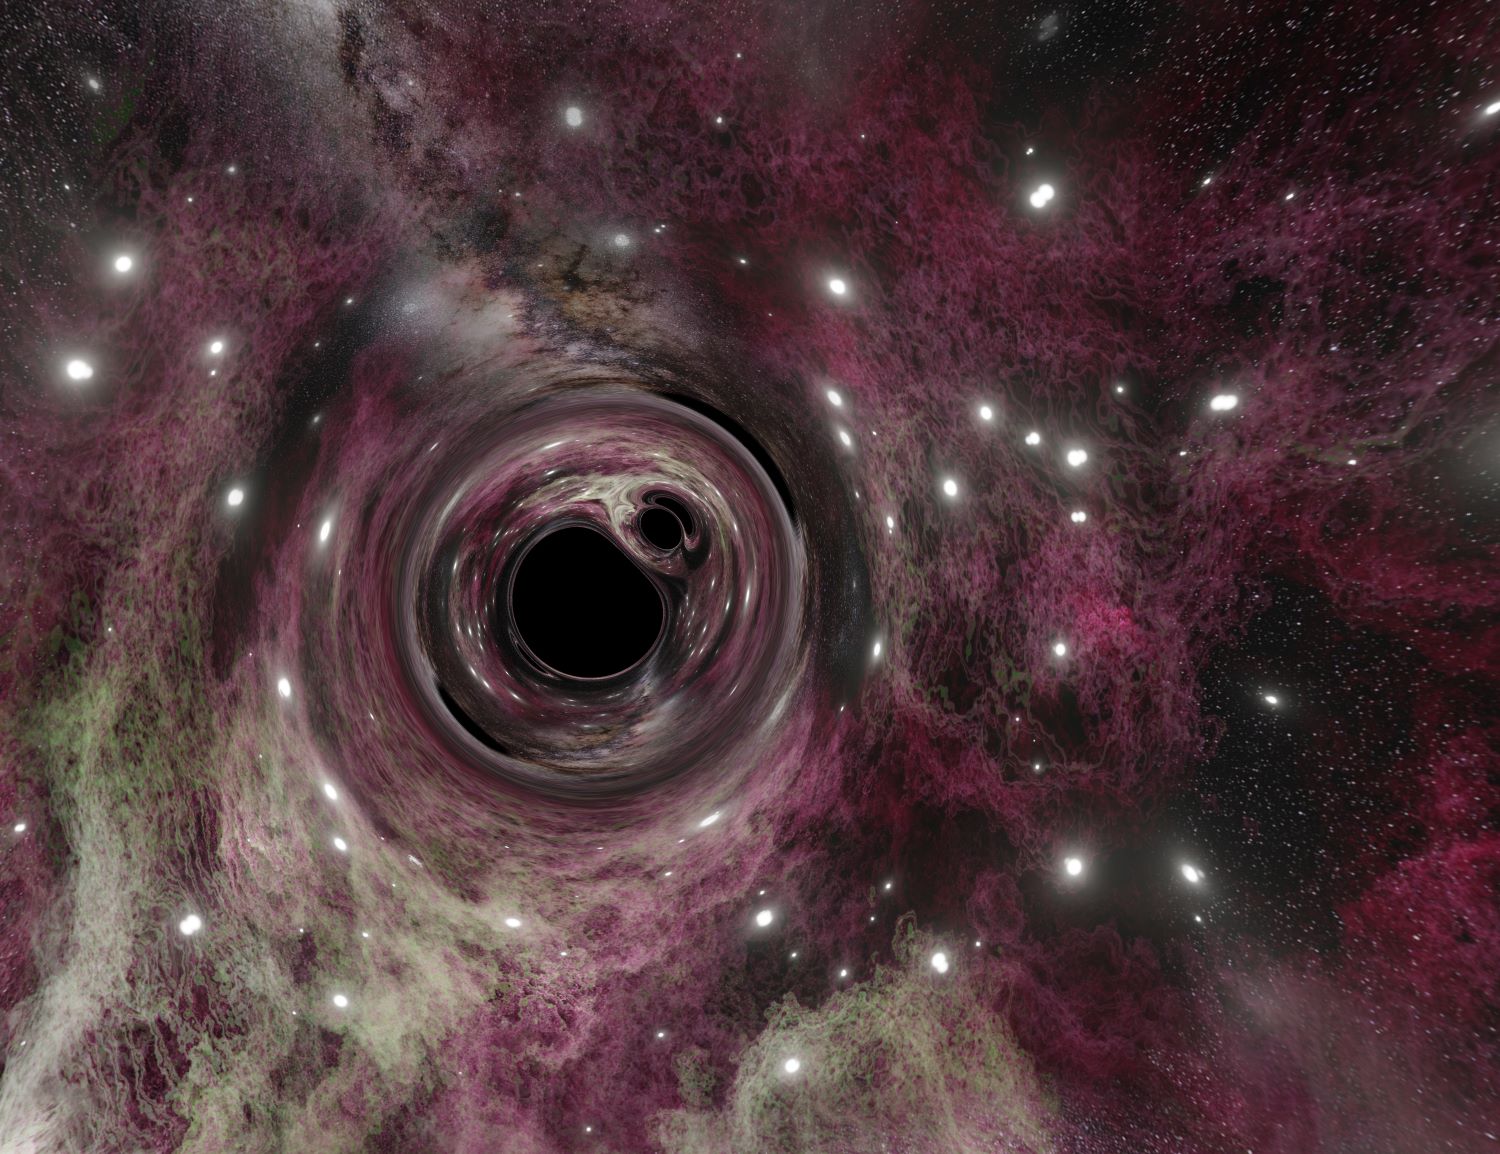 31.5 solar-mass black hole